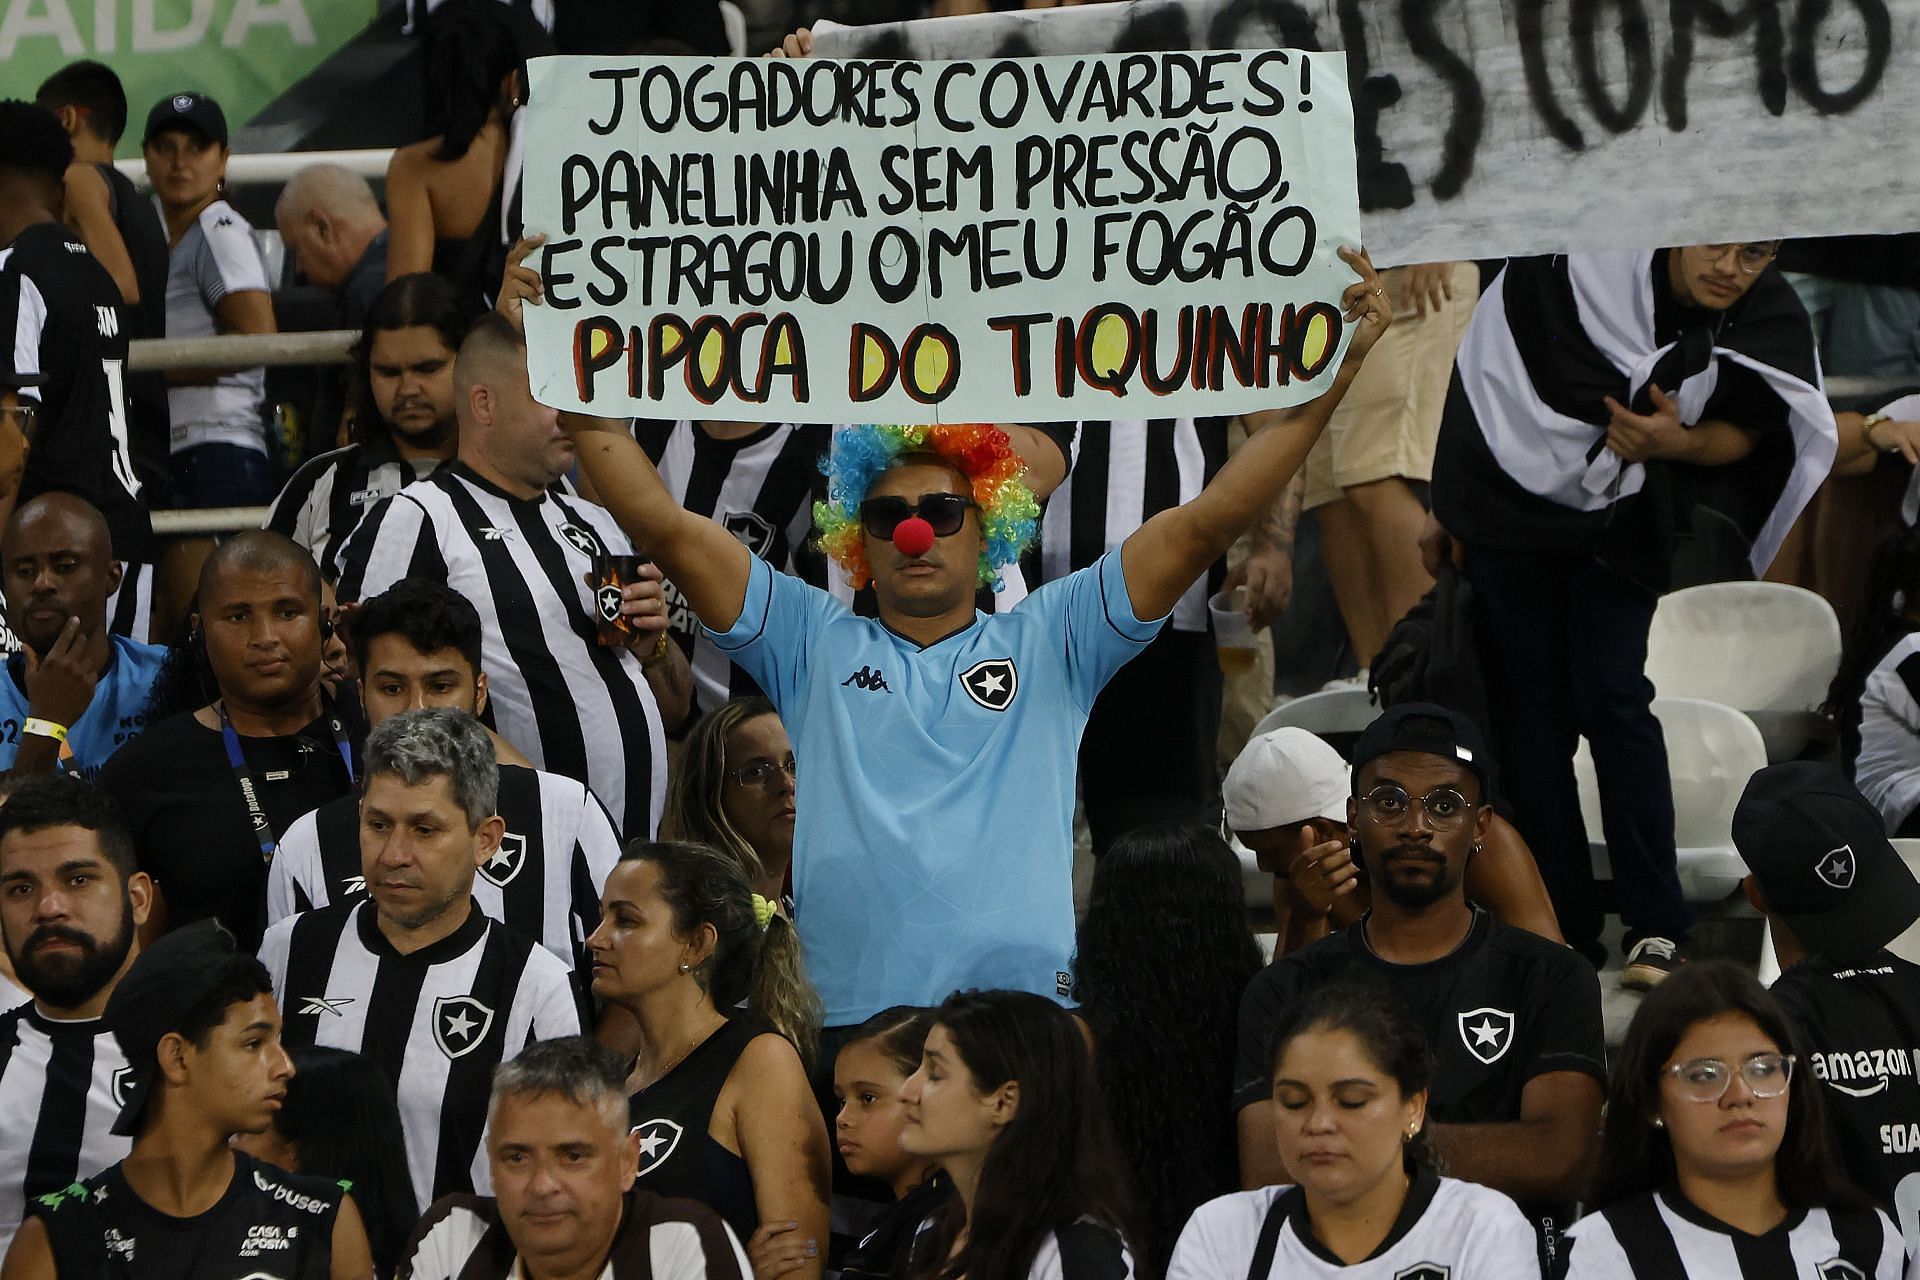 Botafogo face Bragantino on Wednesday 